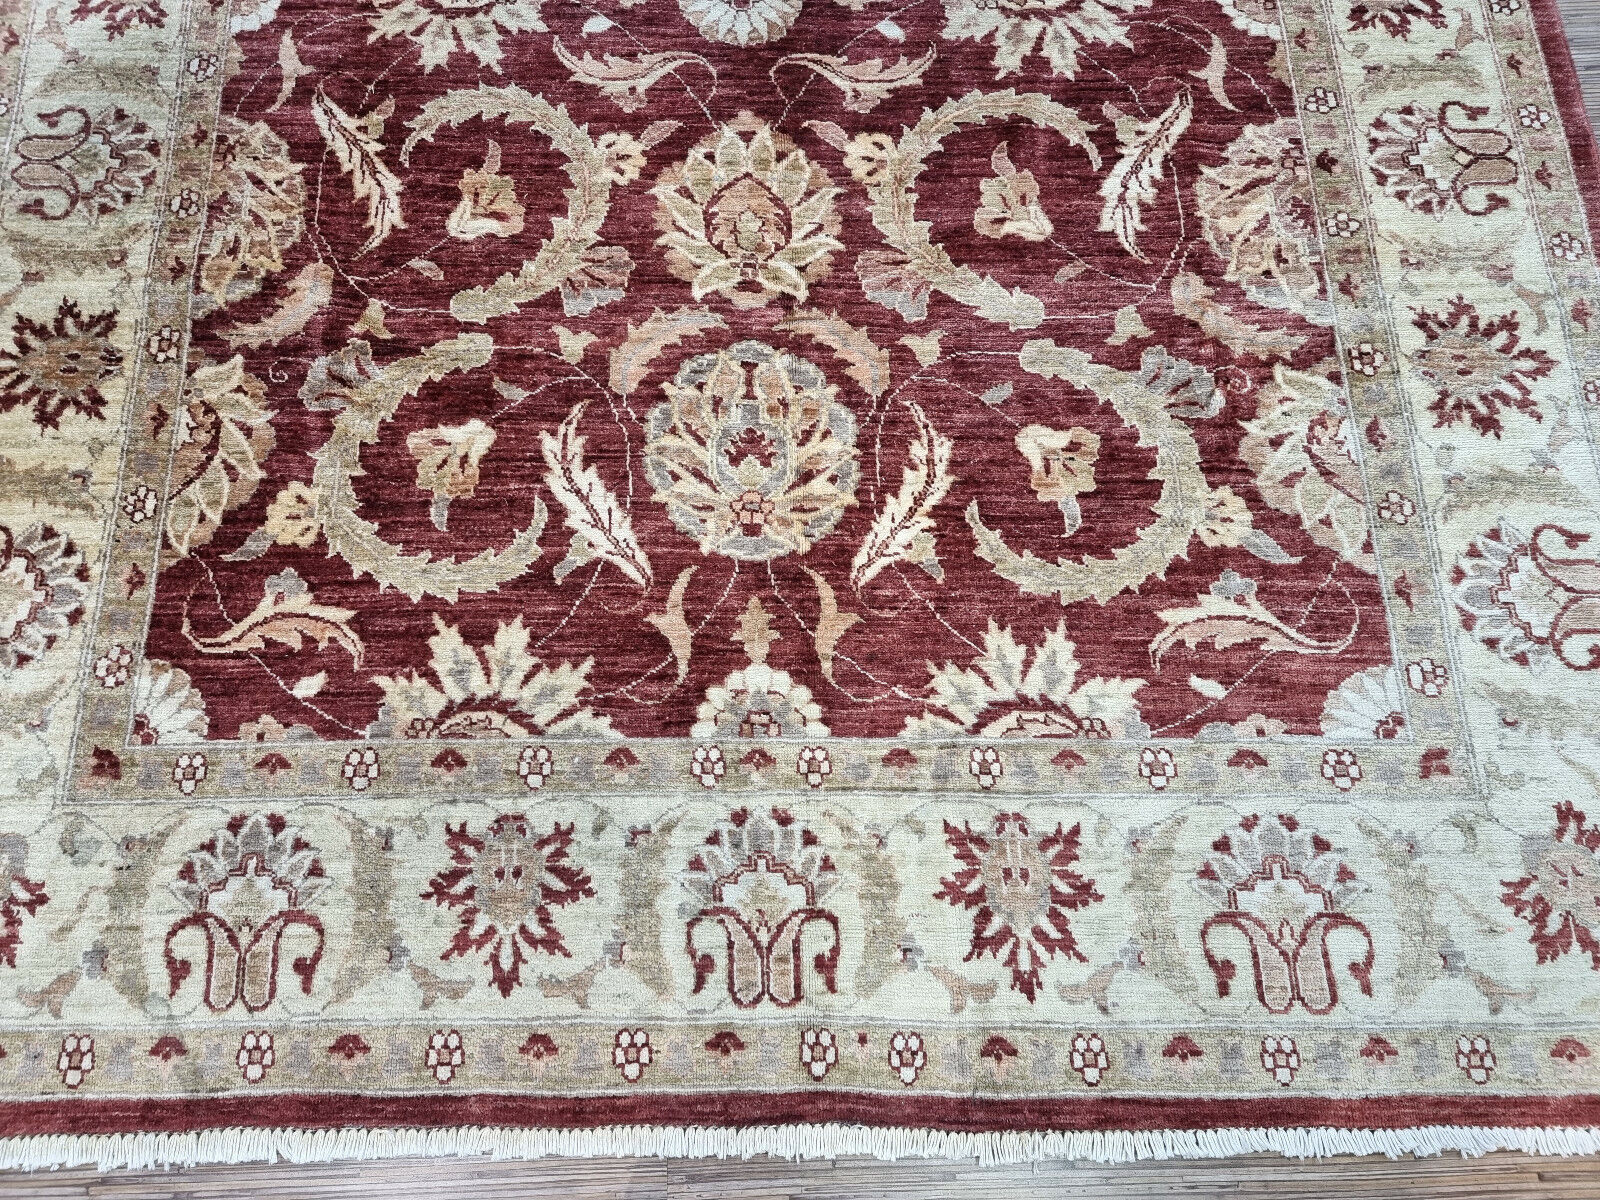 Close-up of cream-colored motifs on Handmade Vintage Afghan Zigler Rug - Detailed view showcasing the cream-colored motifs adding elegance to the rug's design.